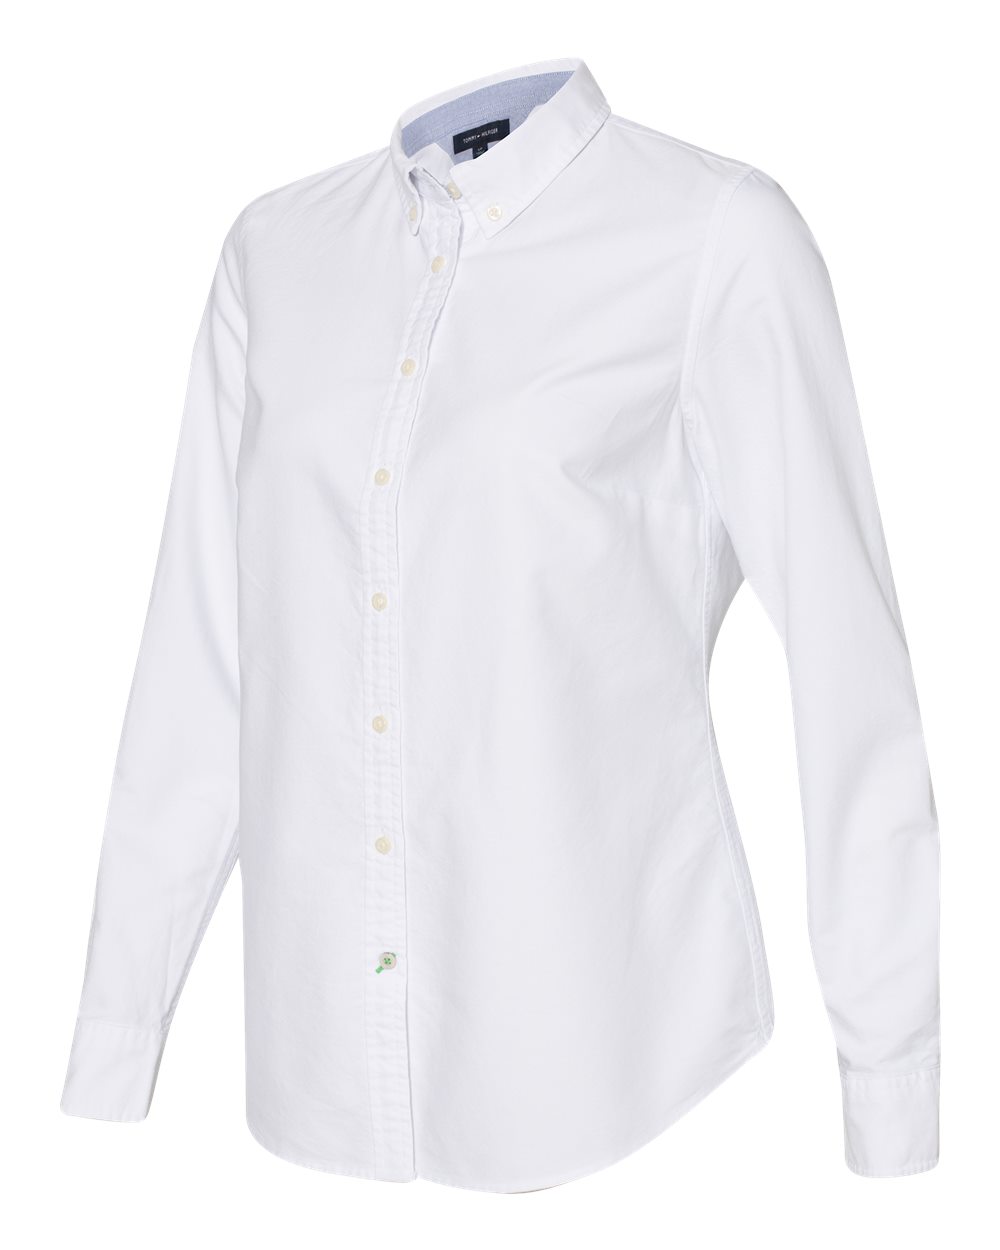 tommy hilfiger white shirt